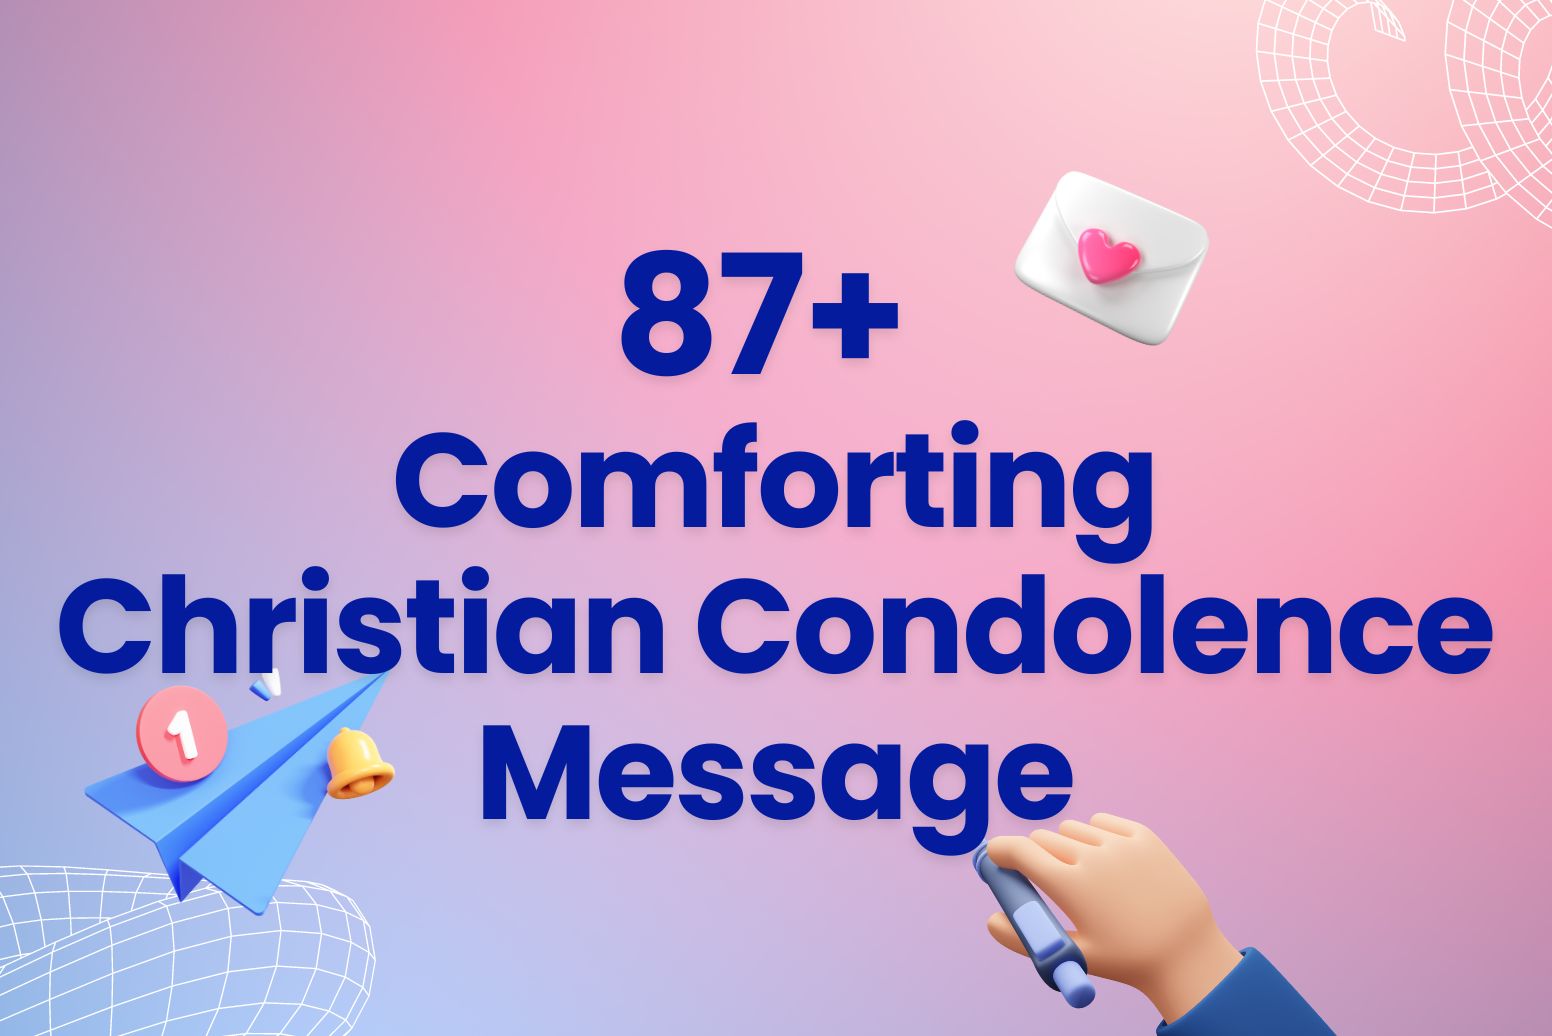 87 Comforting Christian Condolence Message